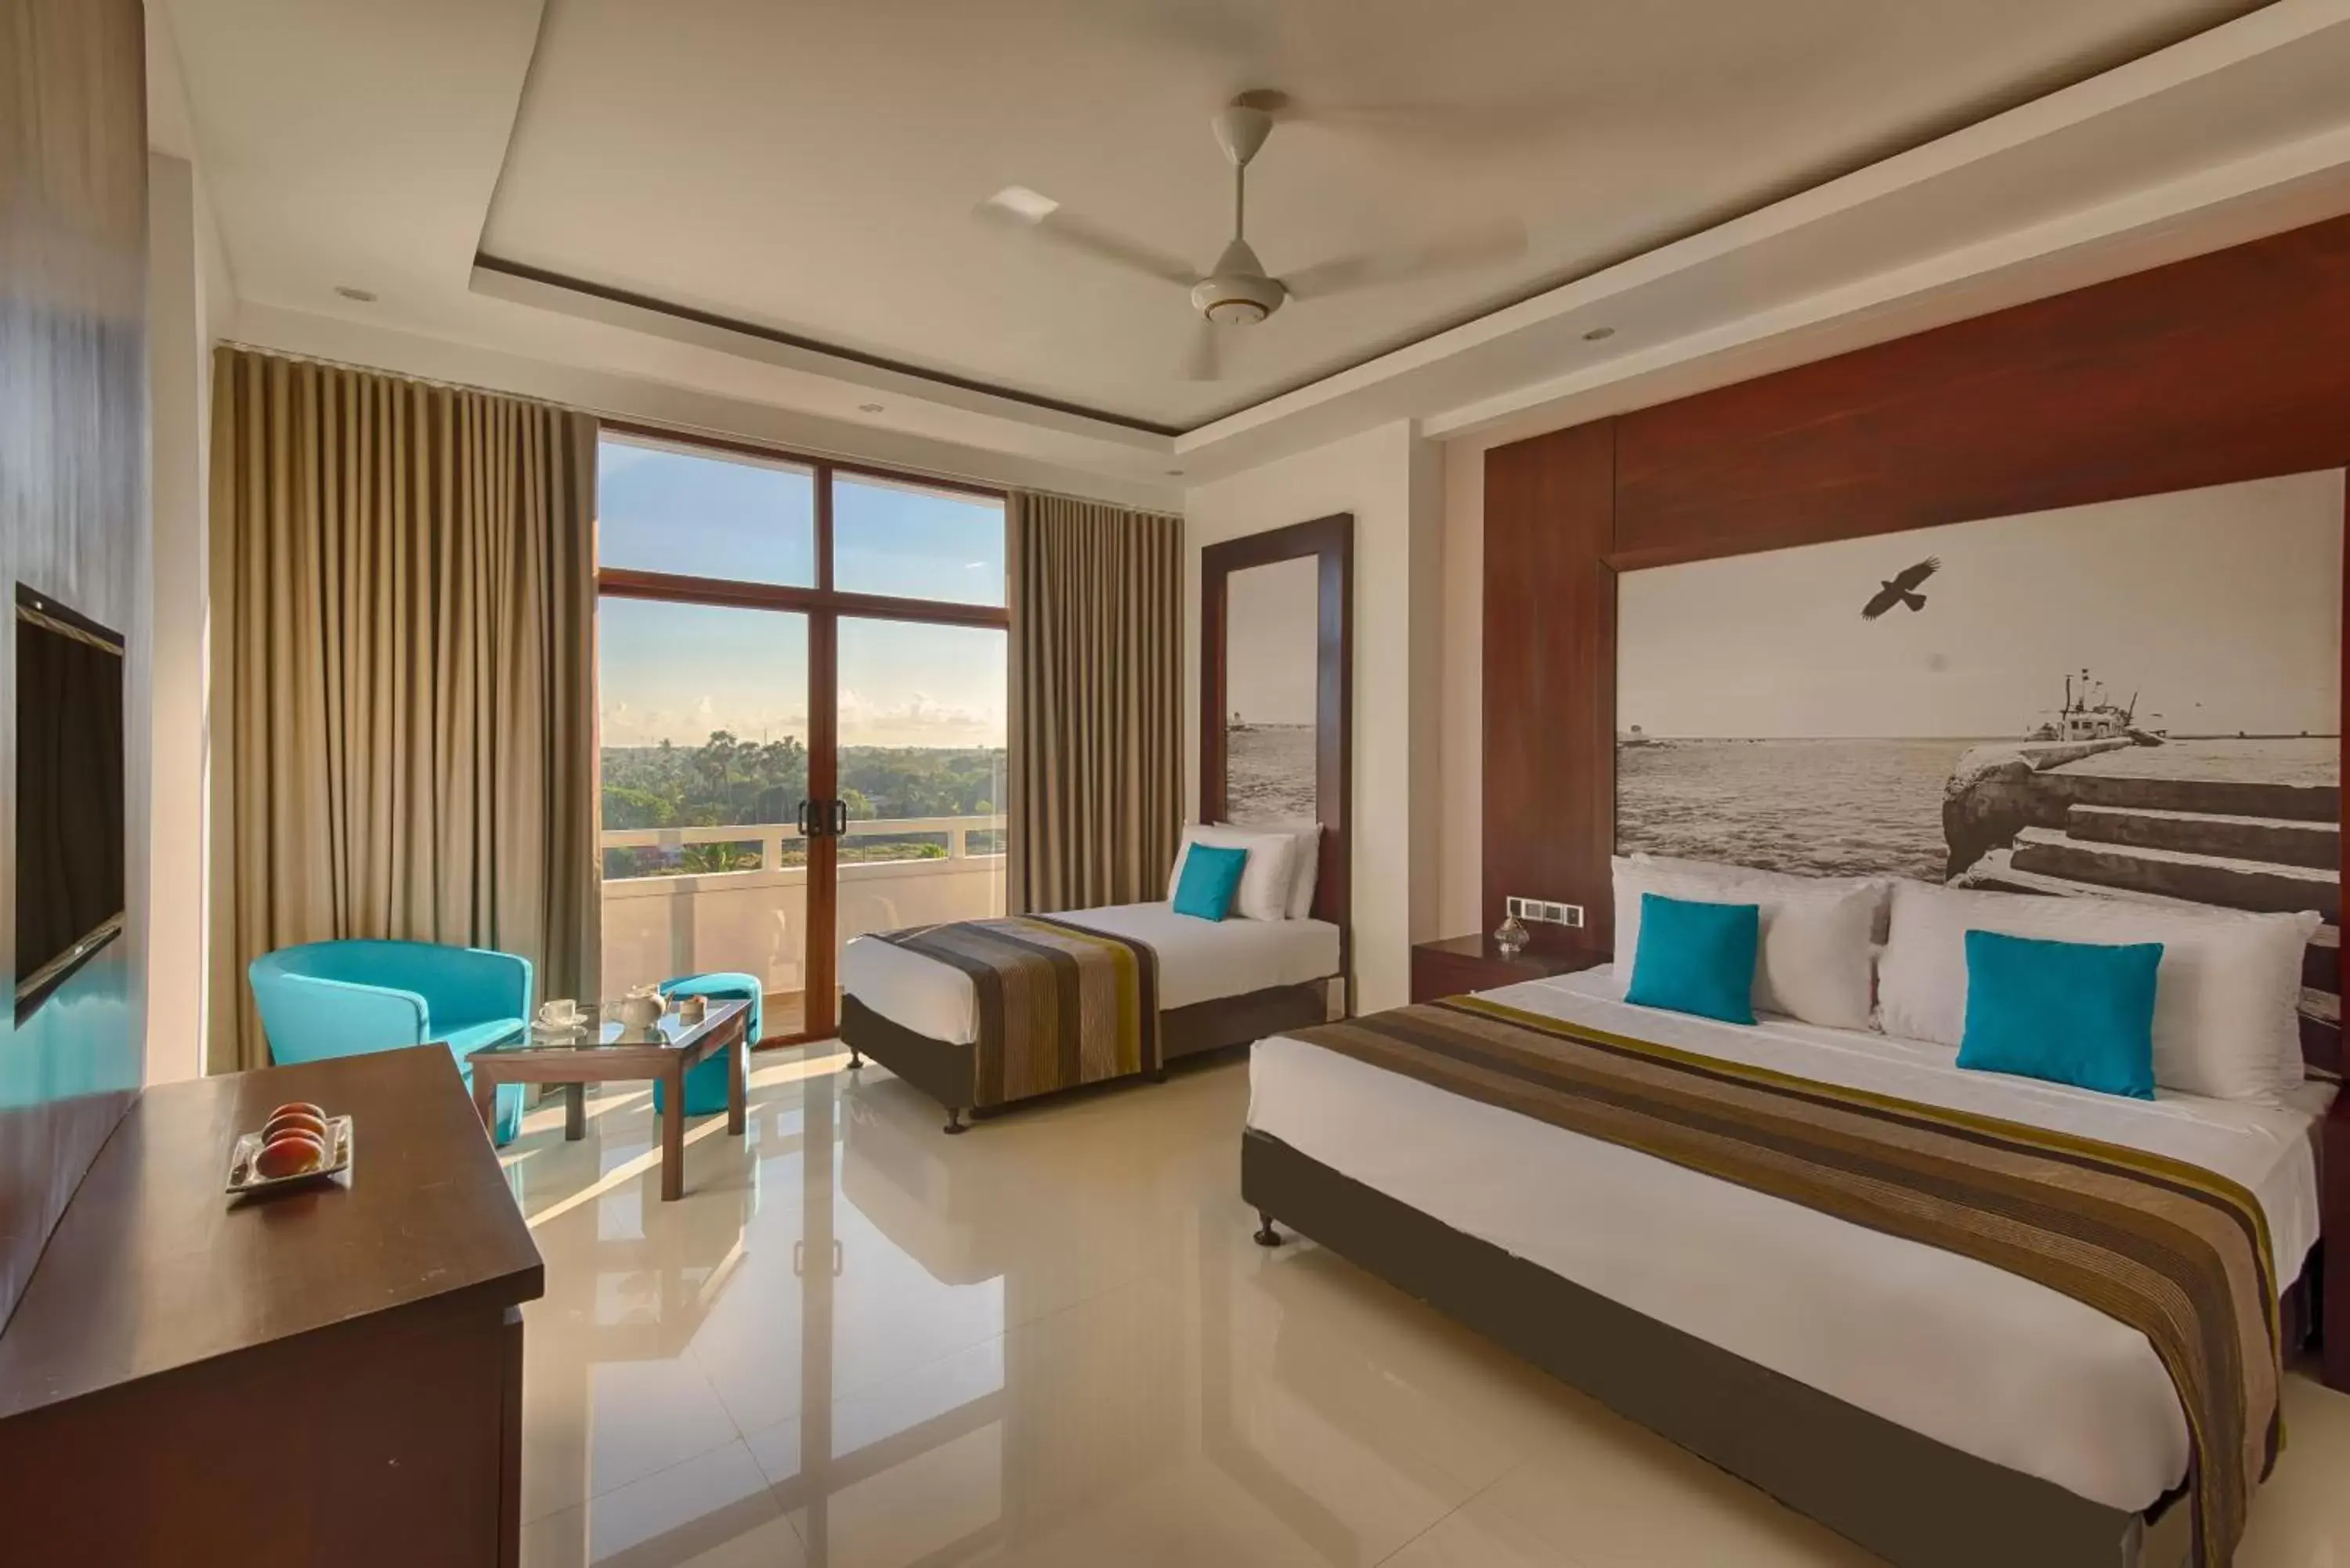 Bedroom in NorthGate Jaffna